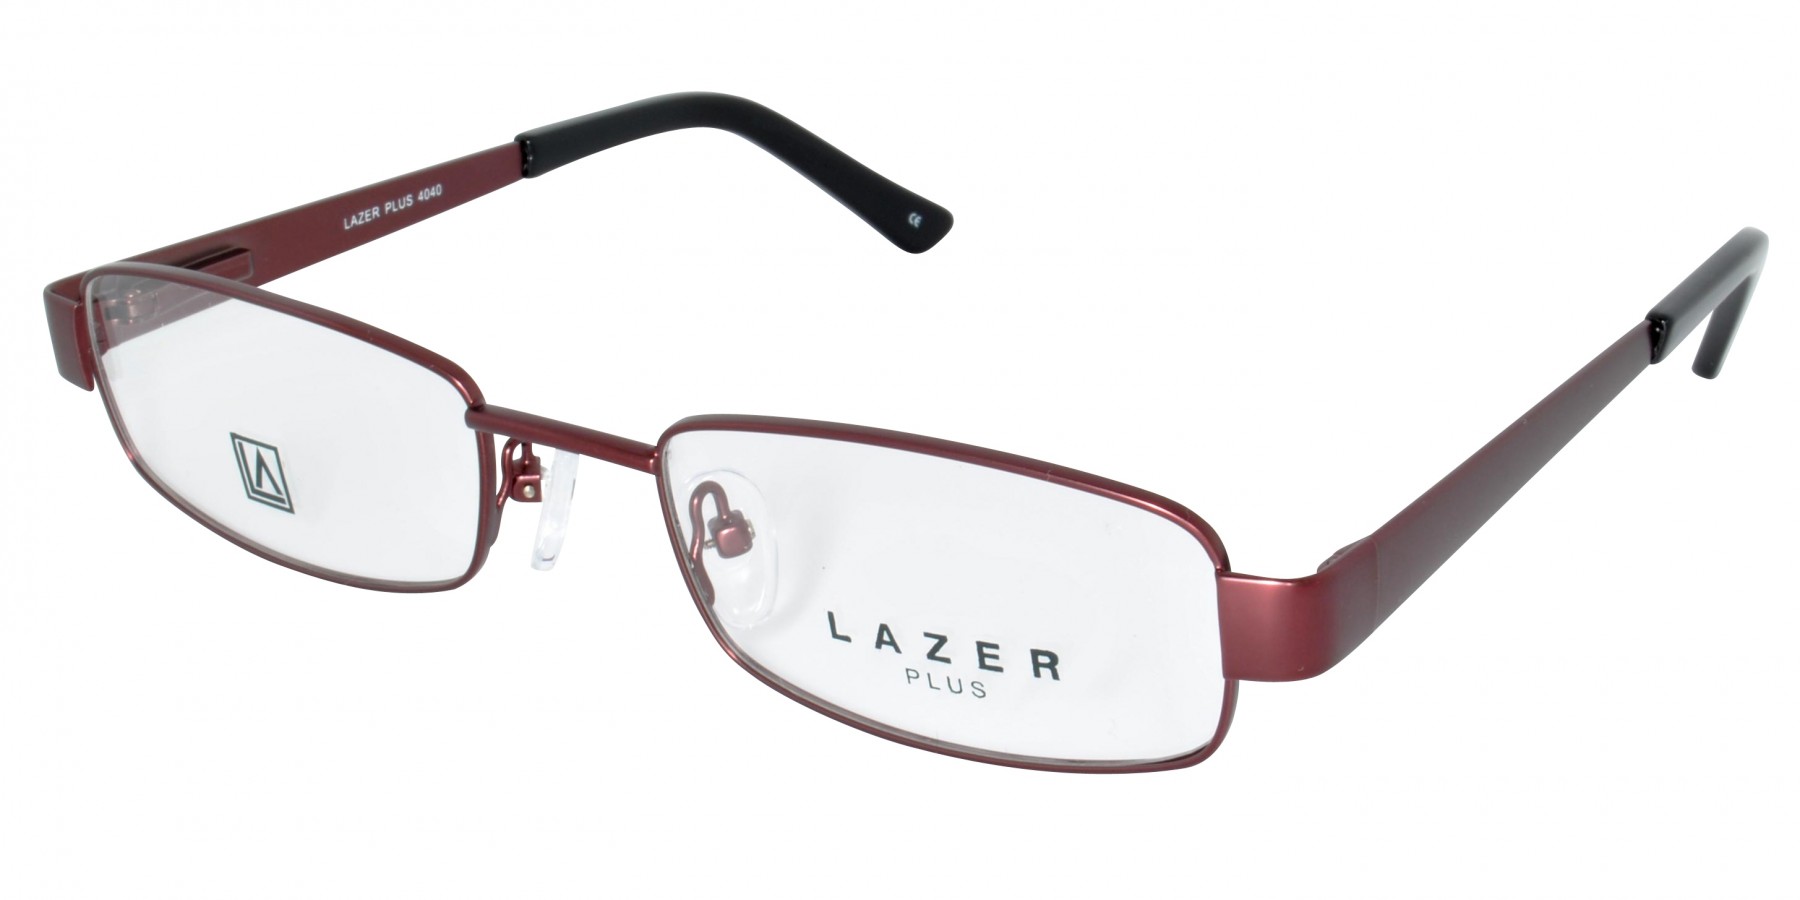 Lazer 4040 Prescription Glasses